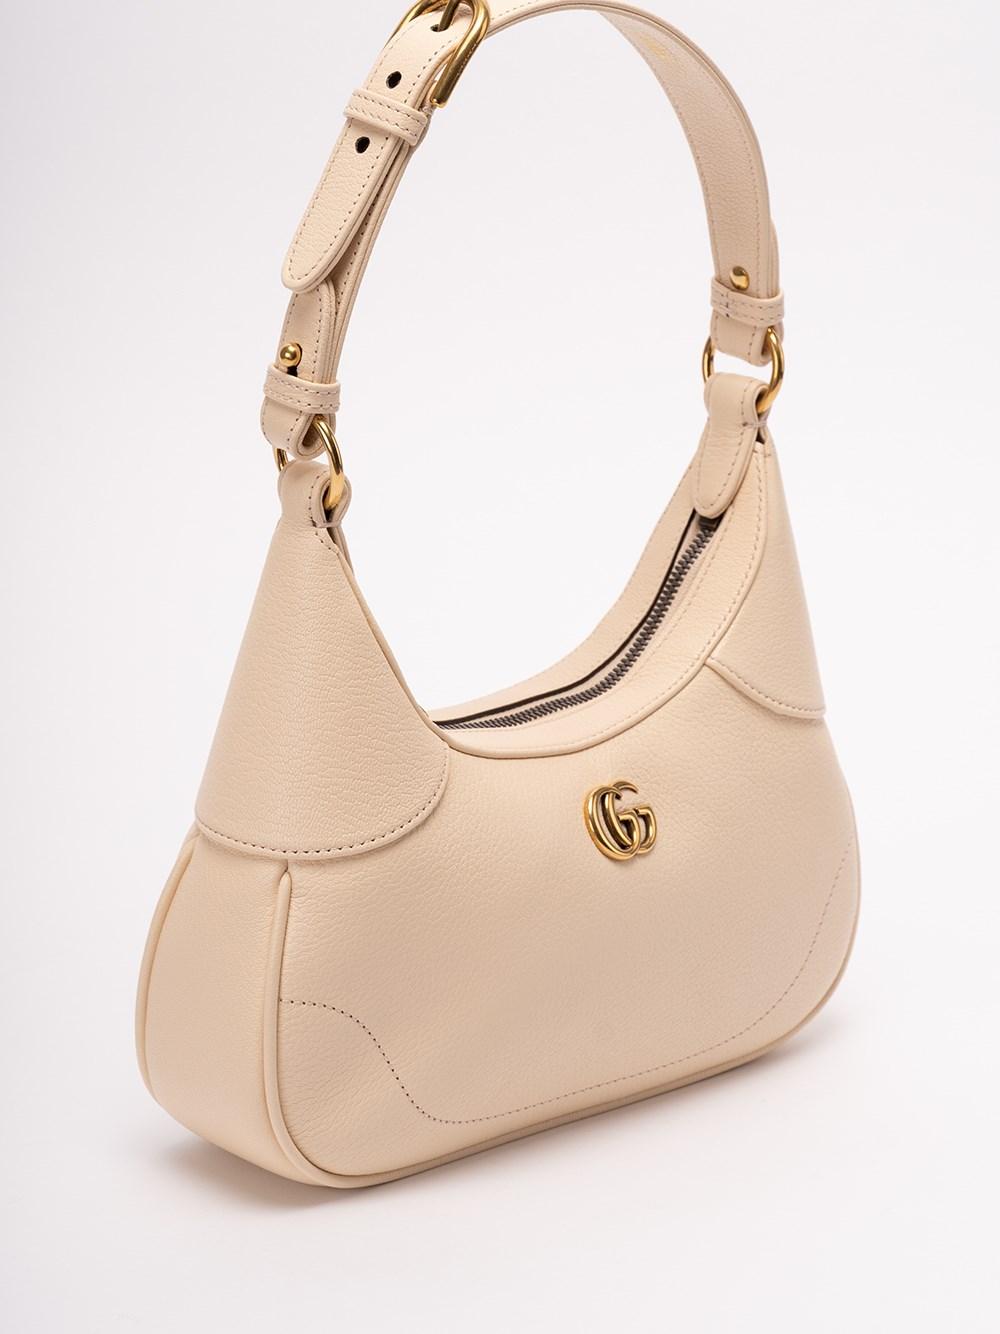 Aphrodite Small Leather Shoulder Bag in White - Gucci